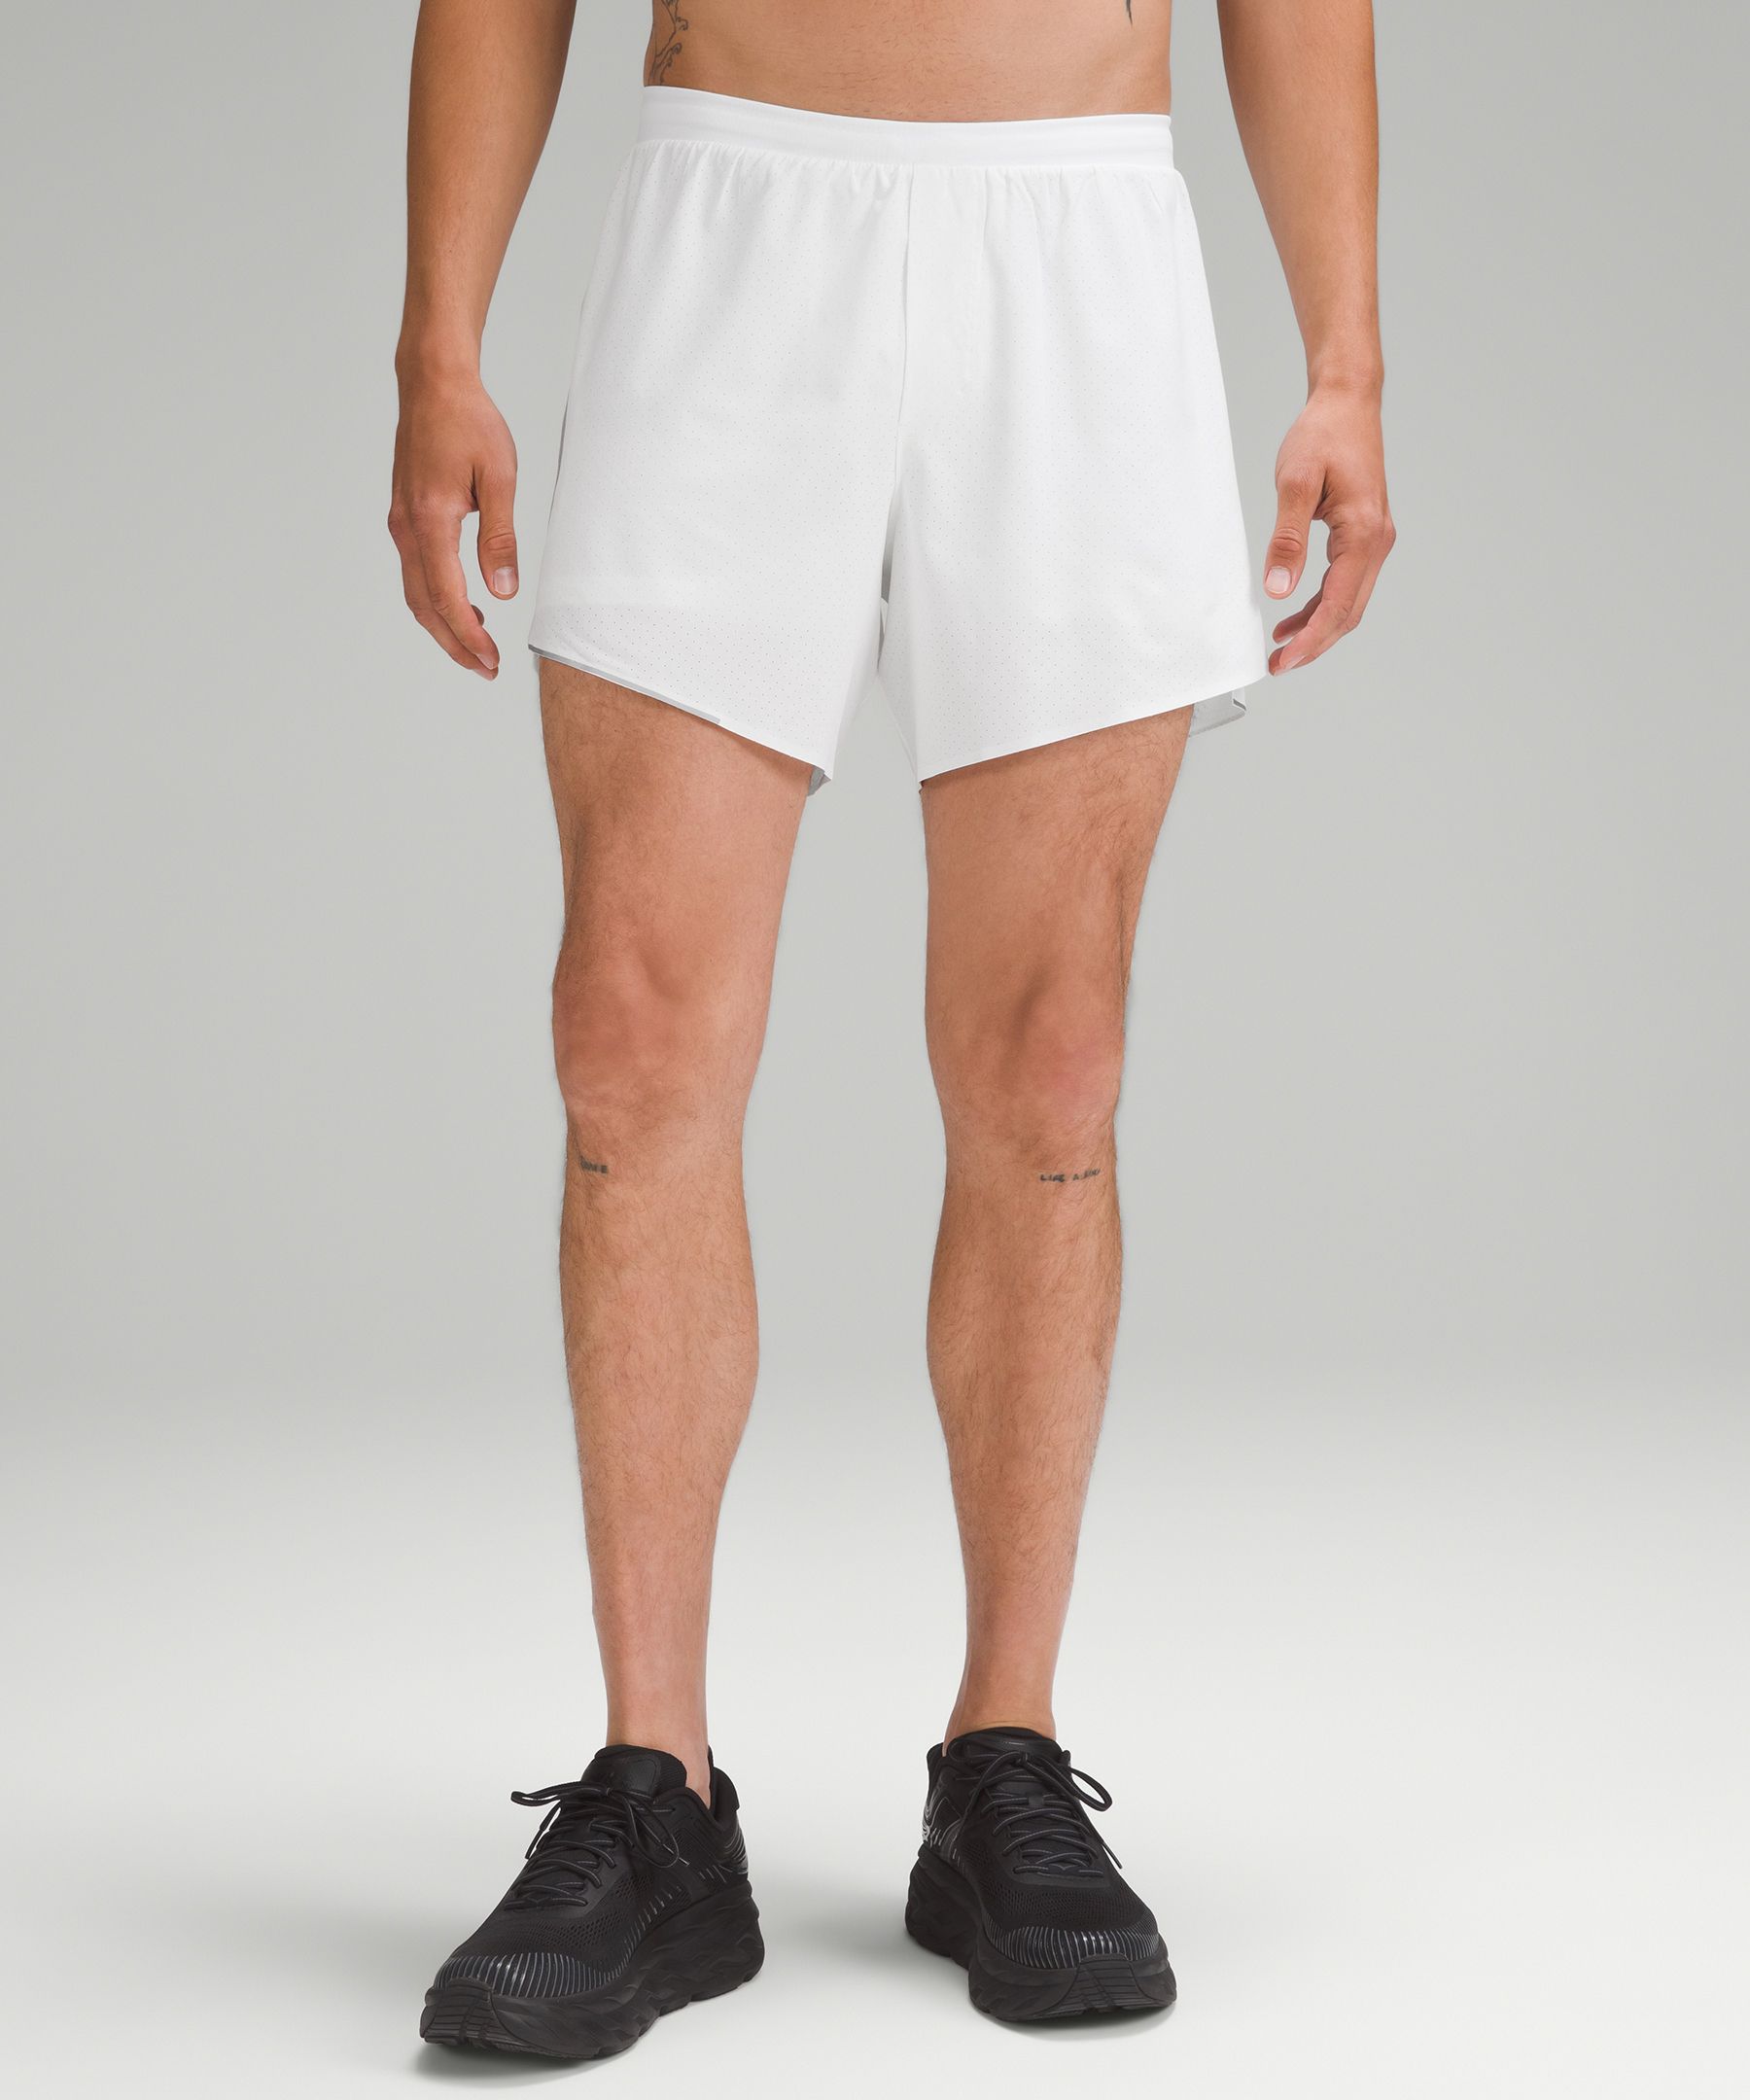 Men's Liner Short